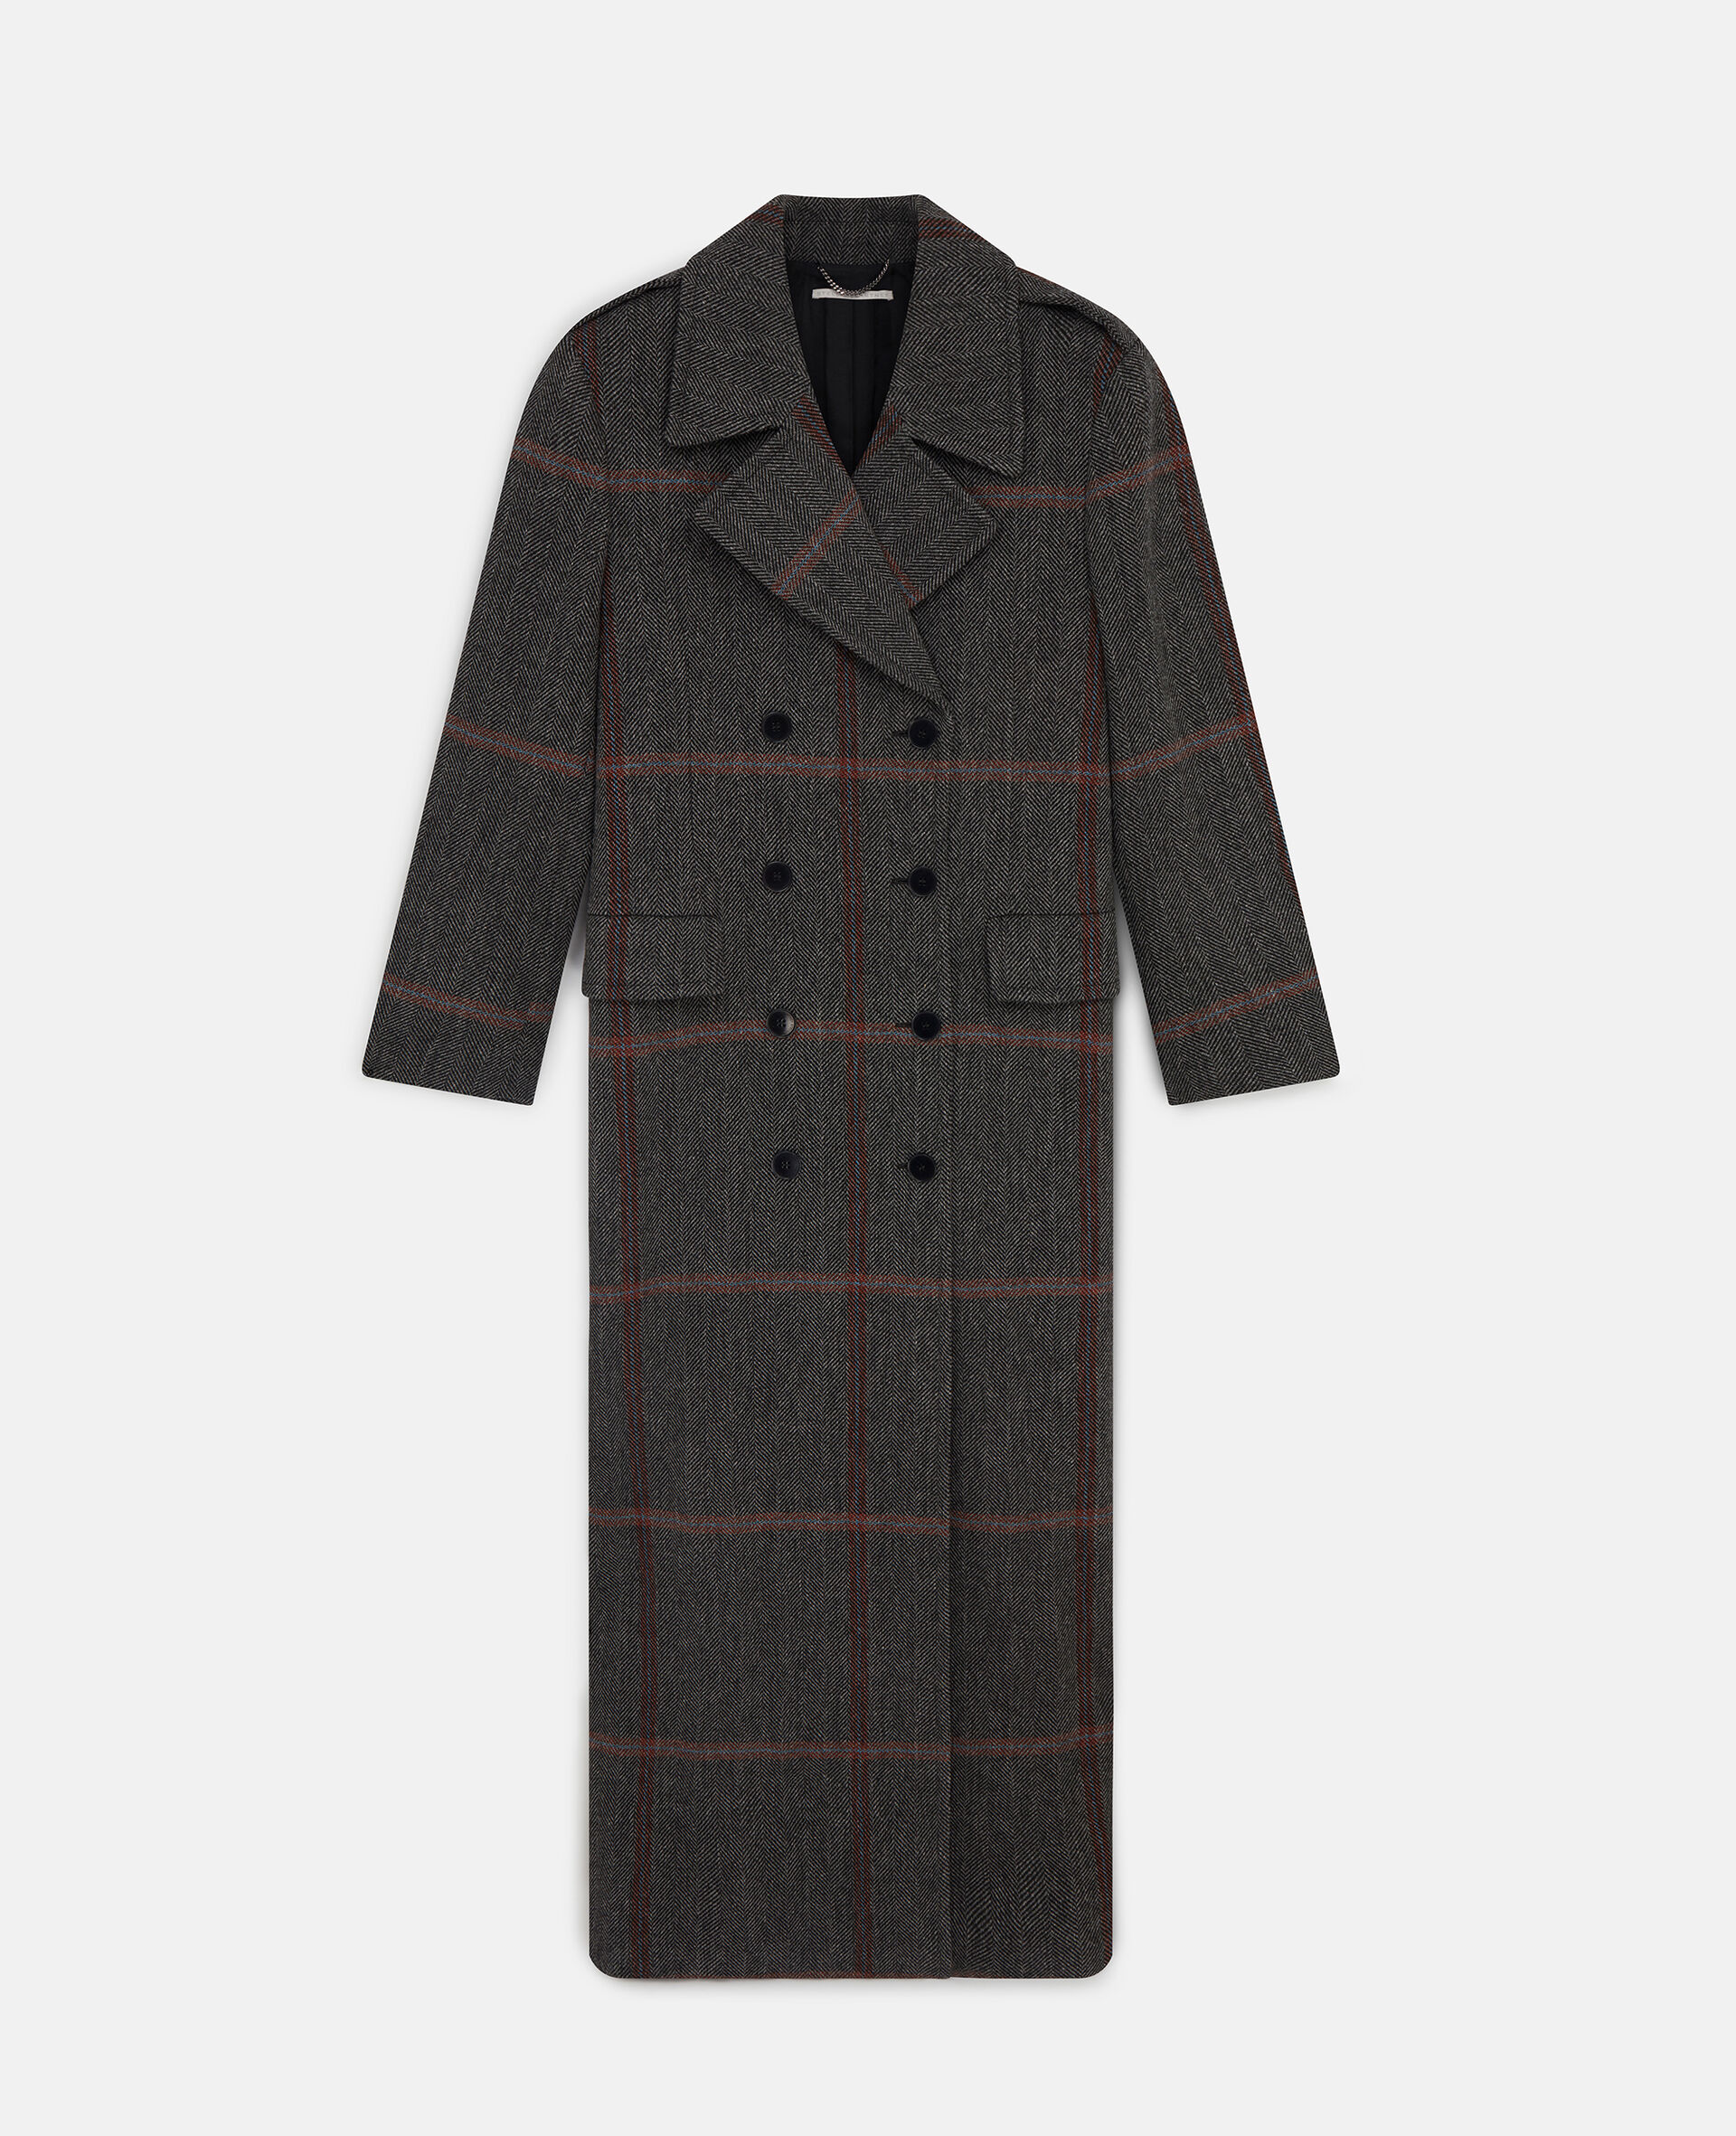 Women's Winter Wool Dress Coat Double Breasted Pea Coat Long Trench Coat